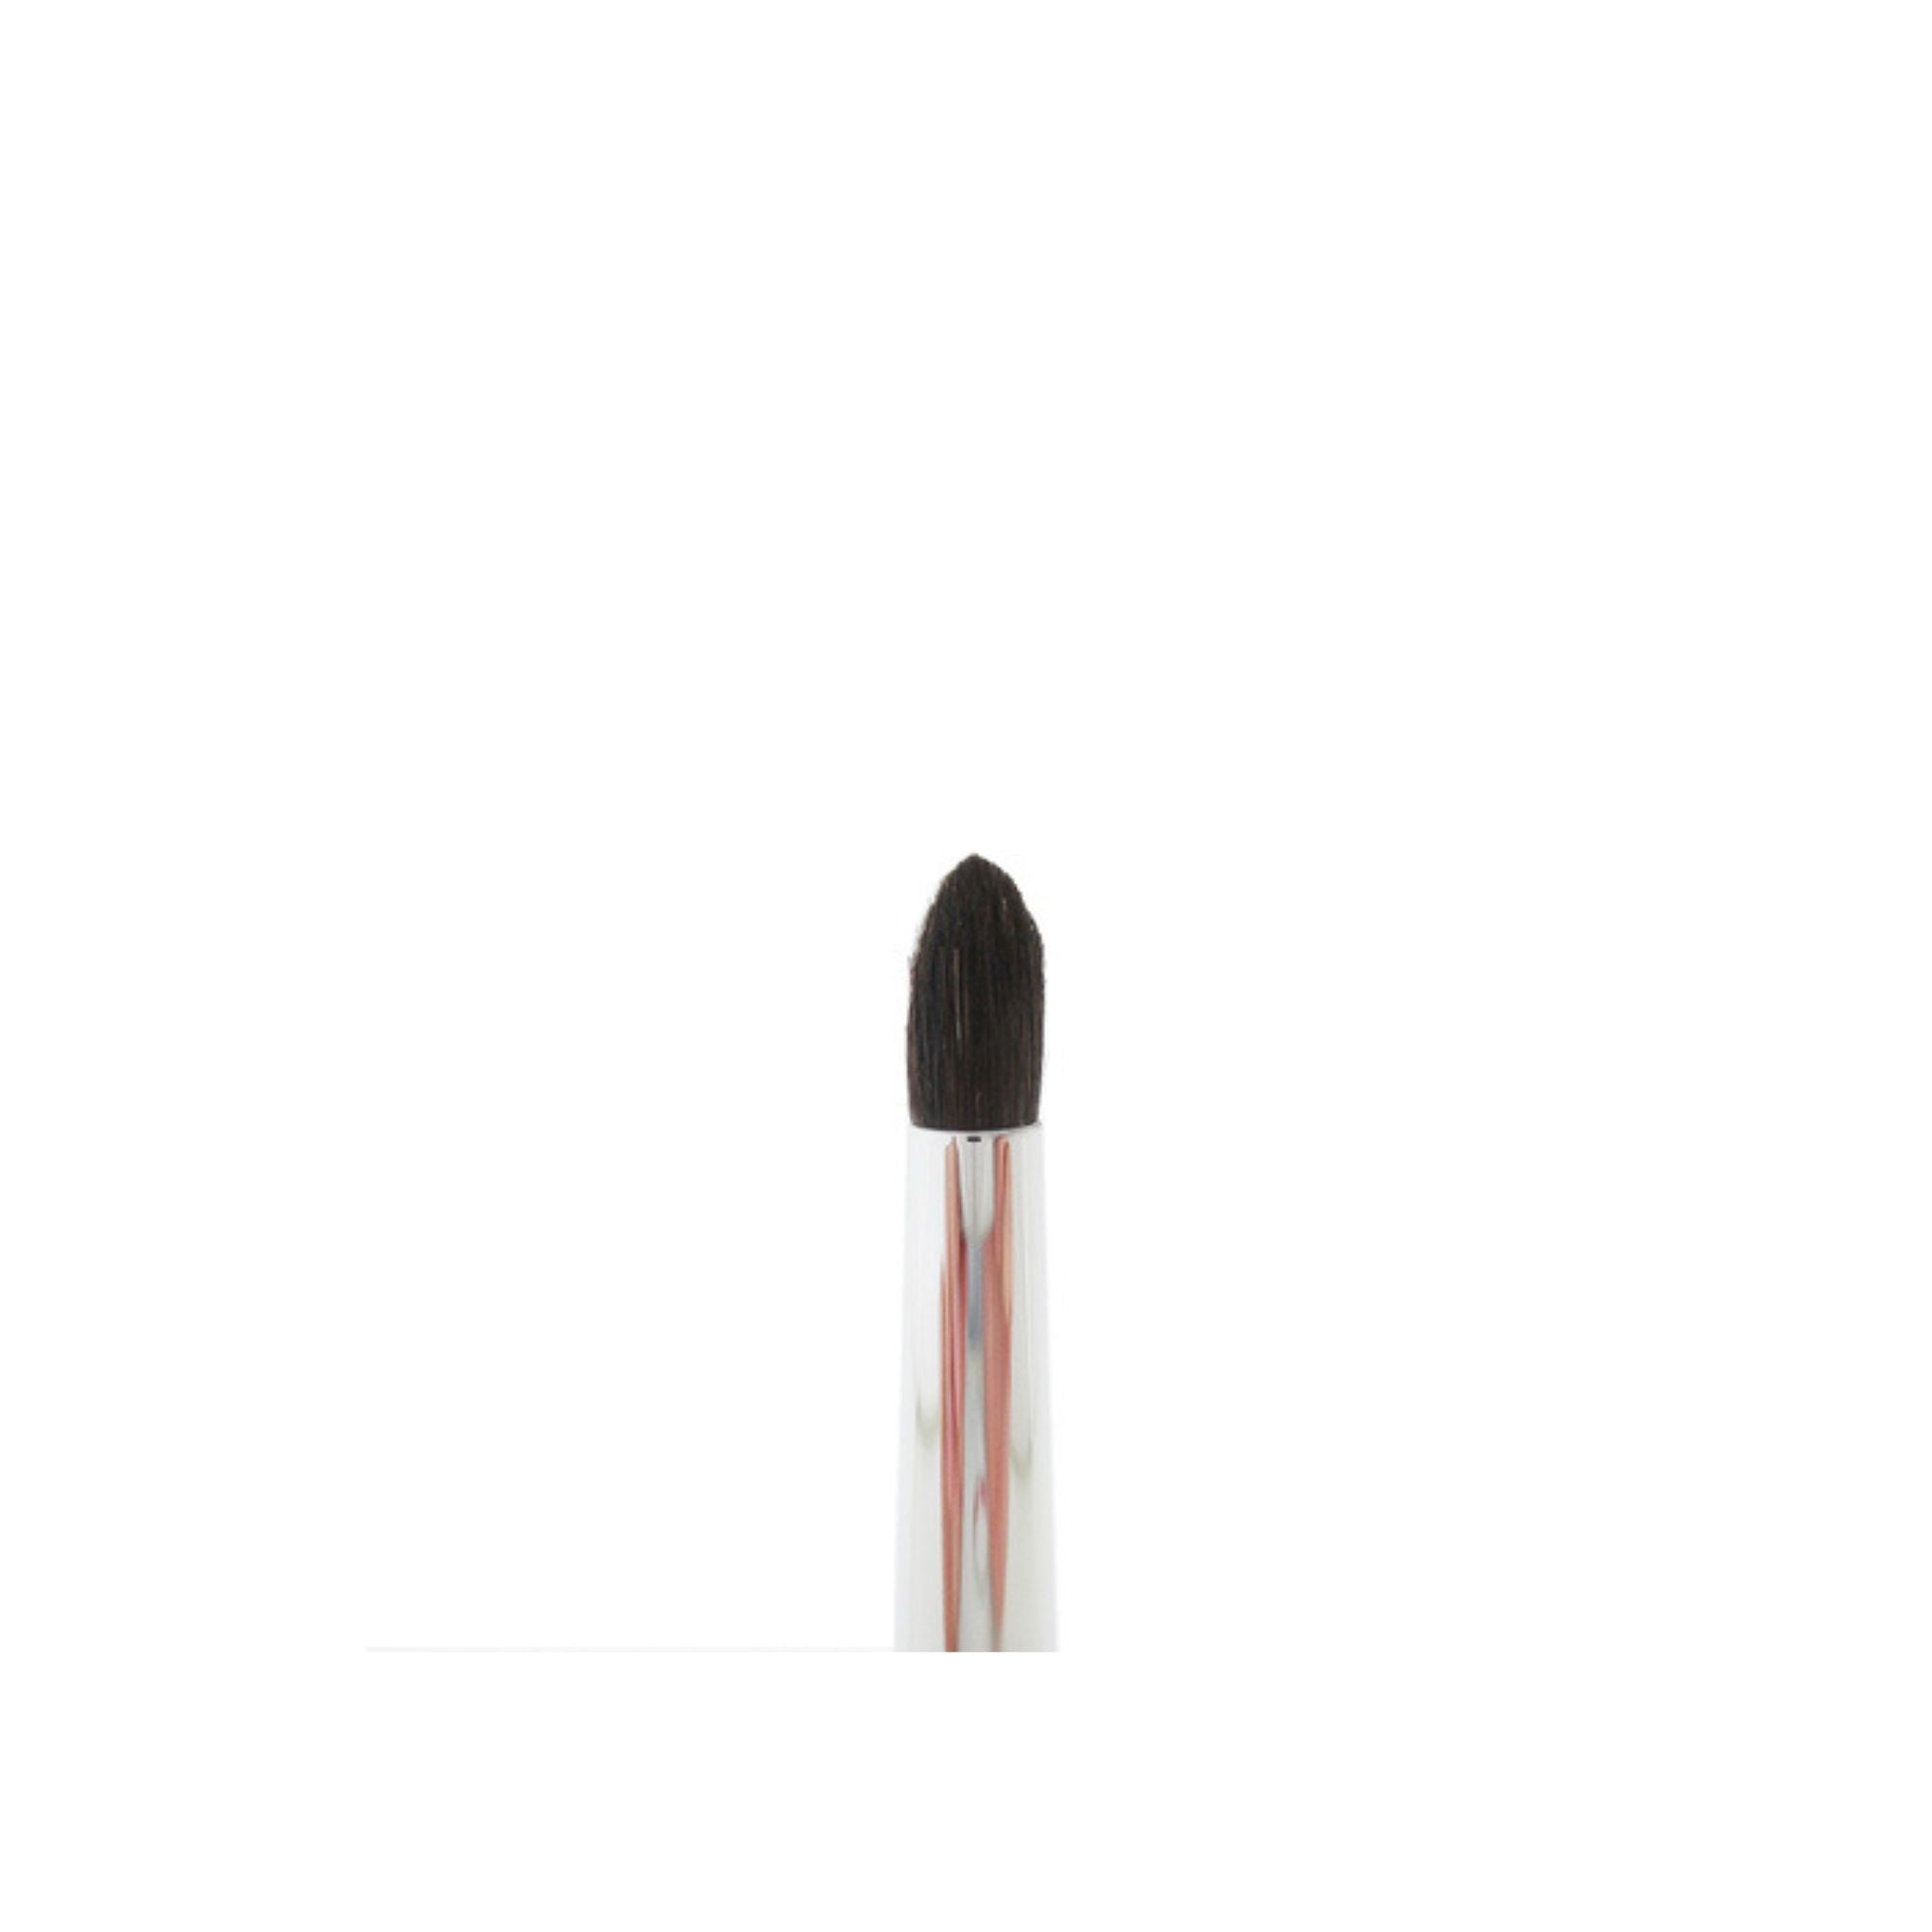 Eihodo Makie Eyeshadow Brush Sakura 小桜 – Red, Black Handles (Limited) - Fude Beauty, Japanese Makeup Brushes